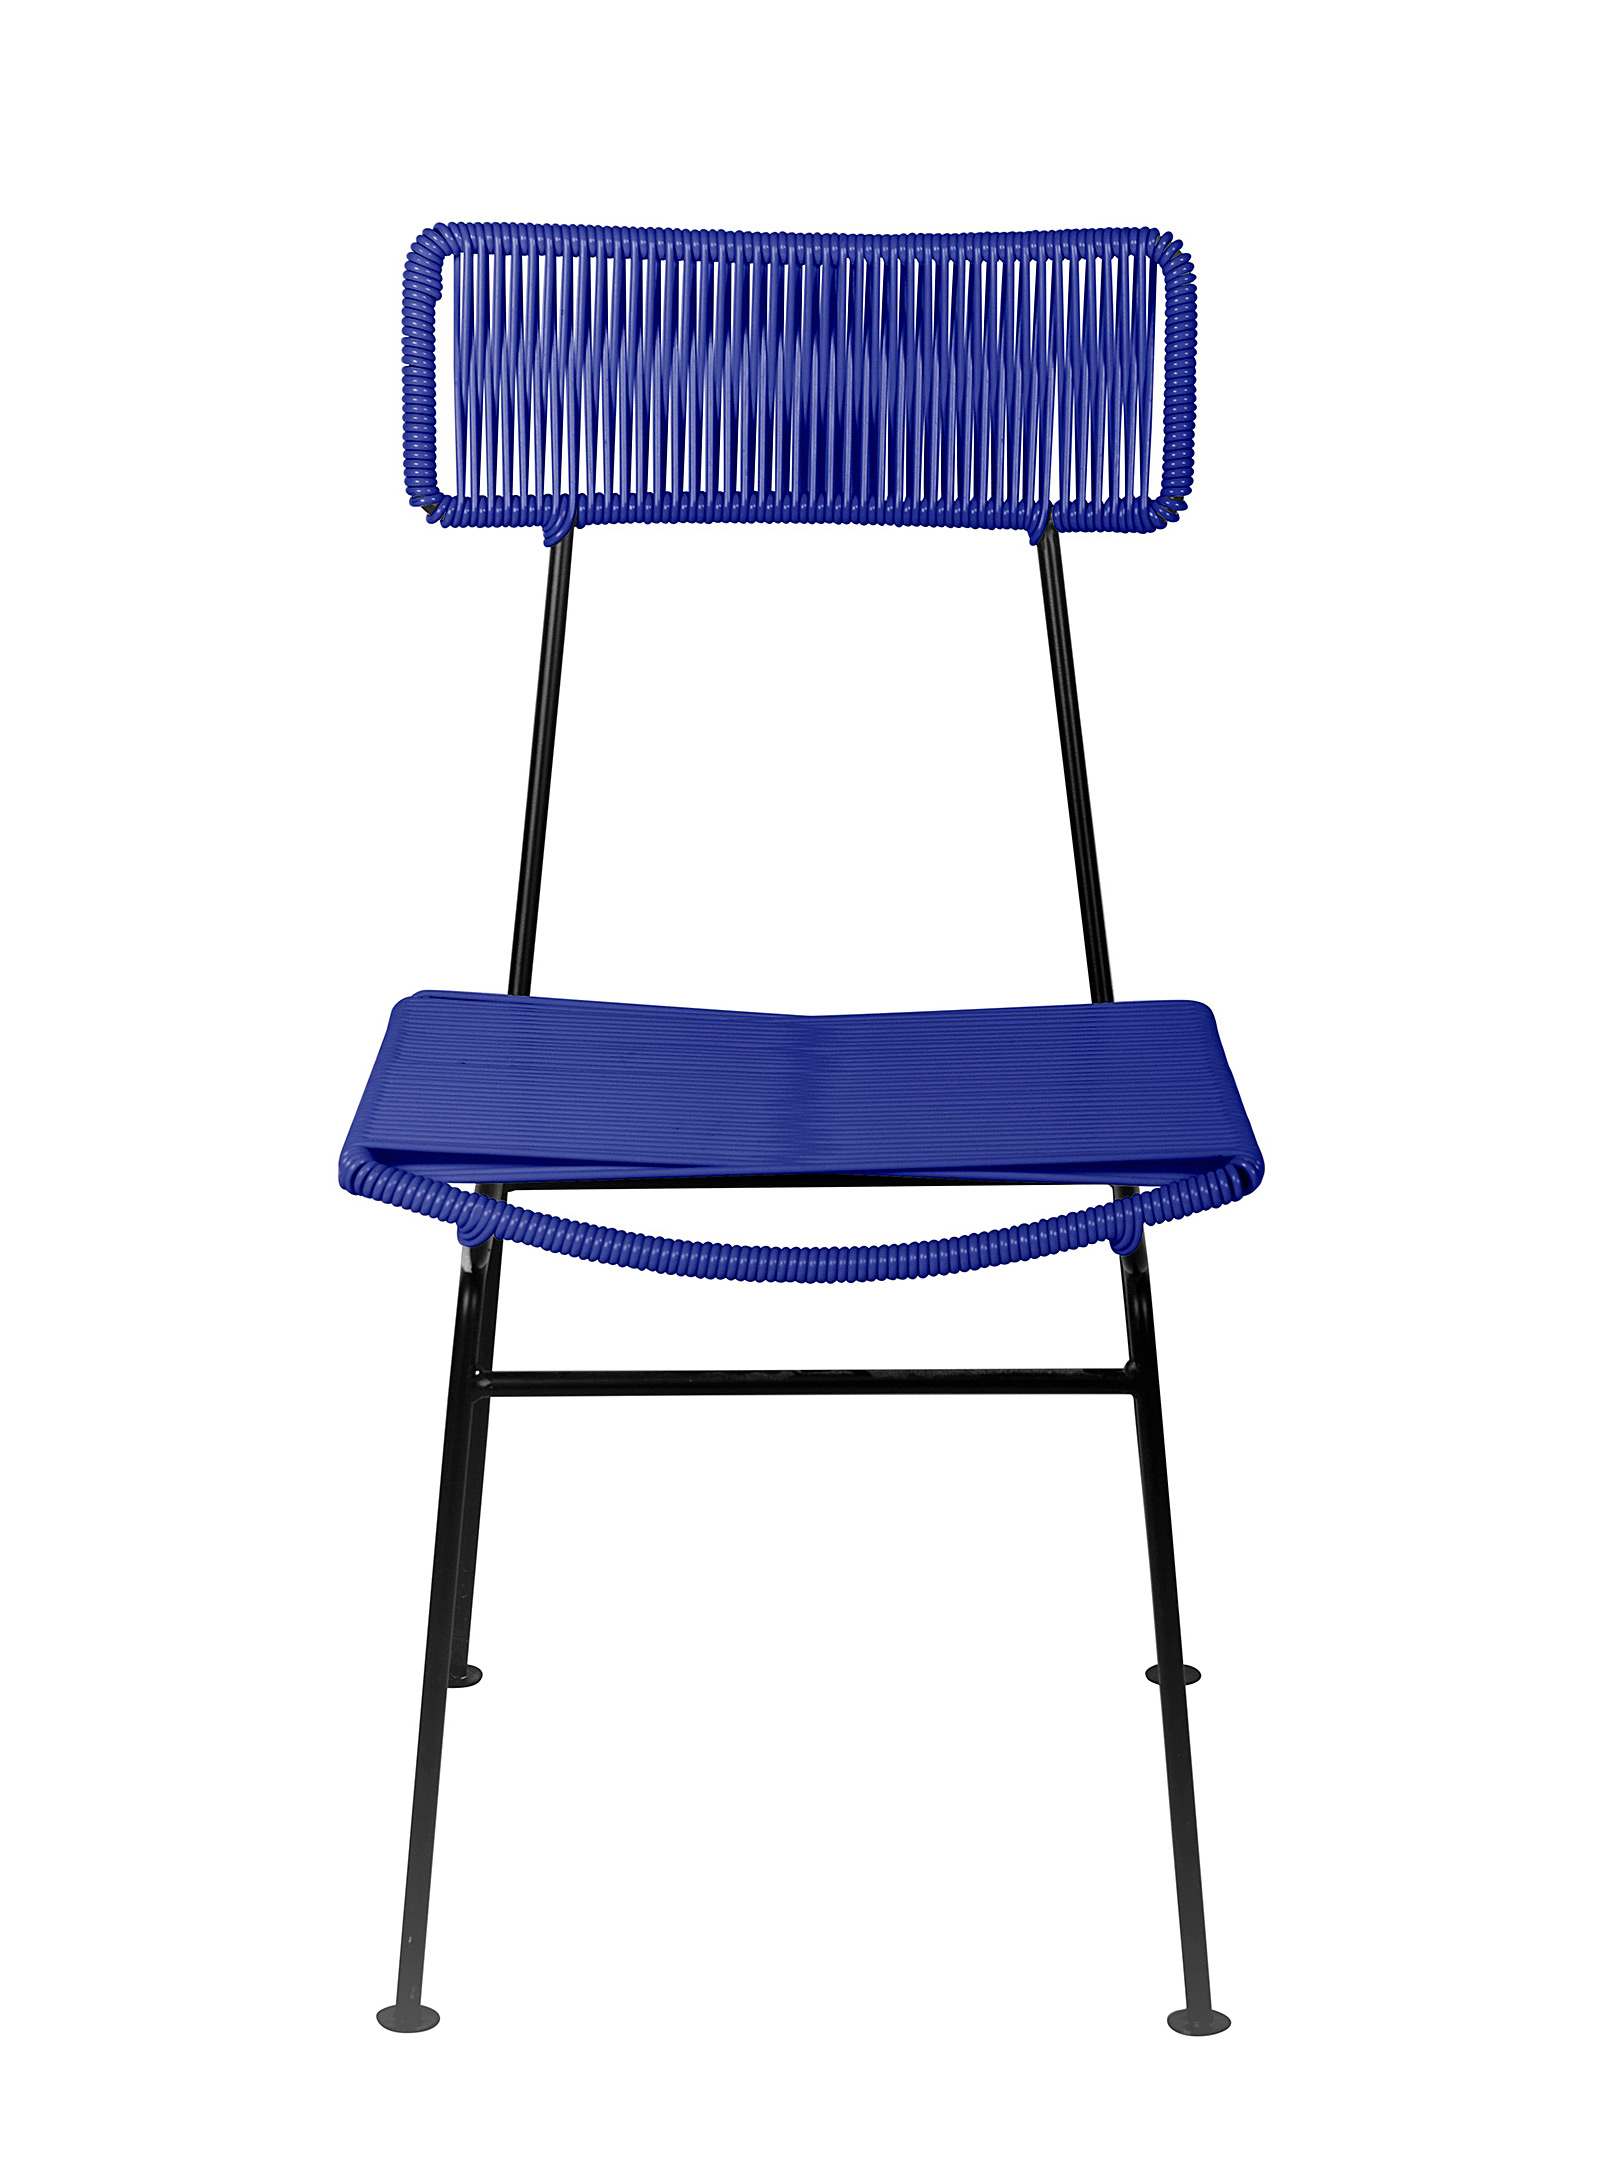 Simons Maison Hapi Outdoor Chair In Blue